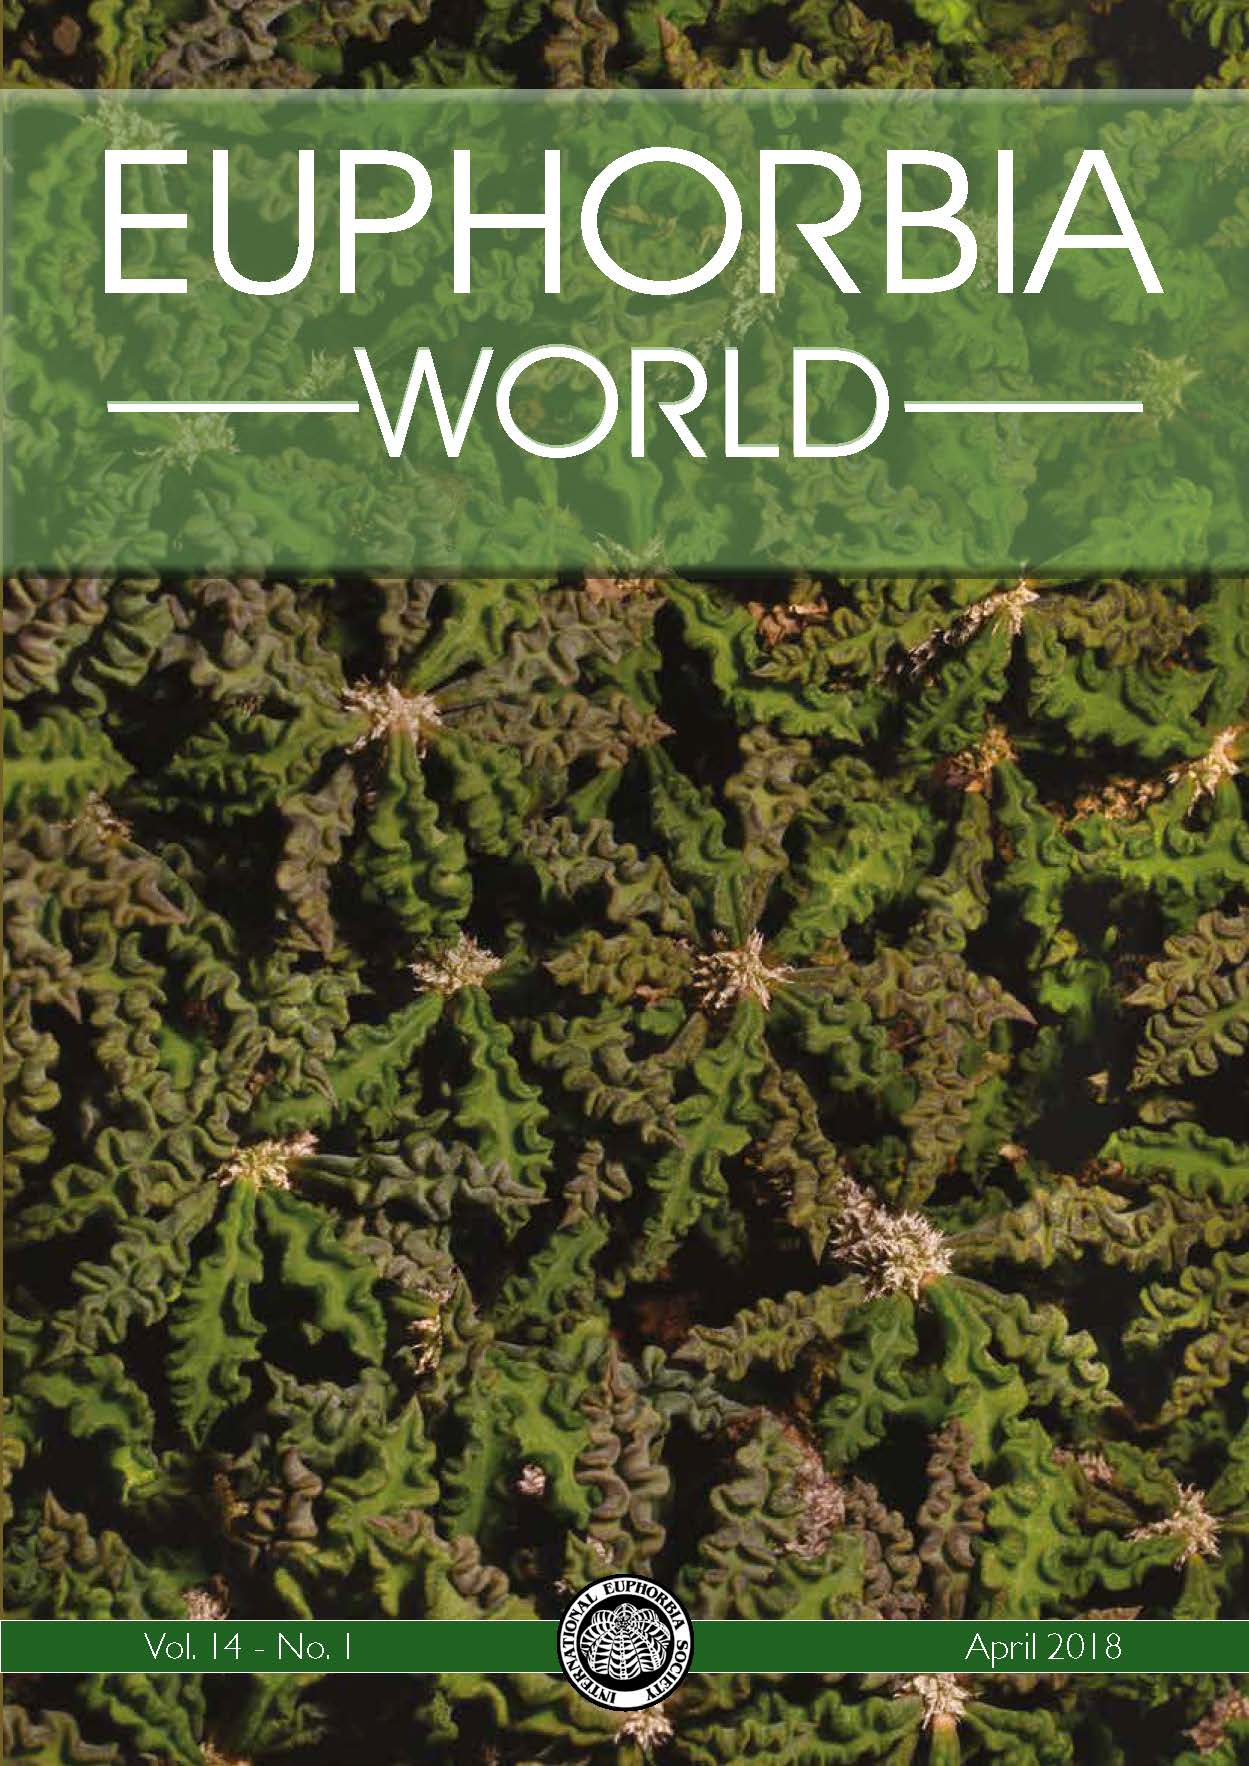 Title  Euphorbia World 14(1)